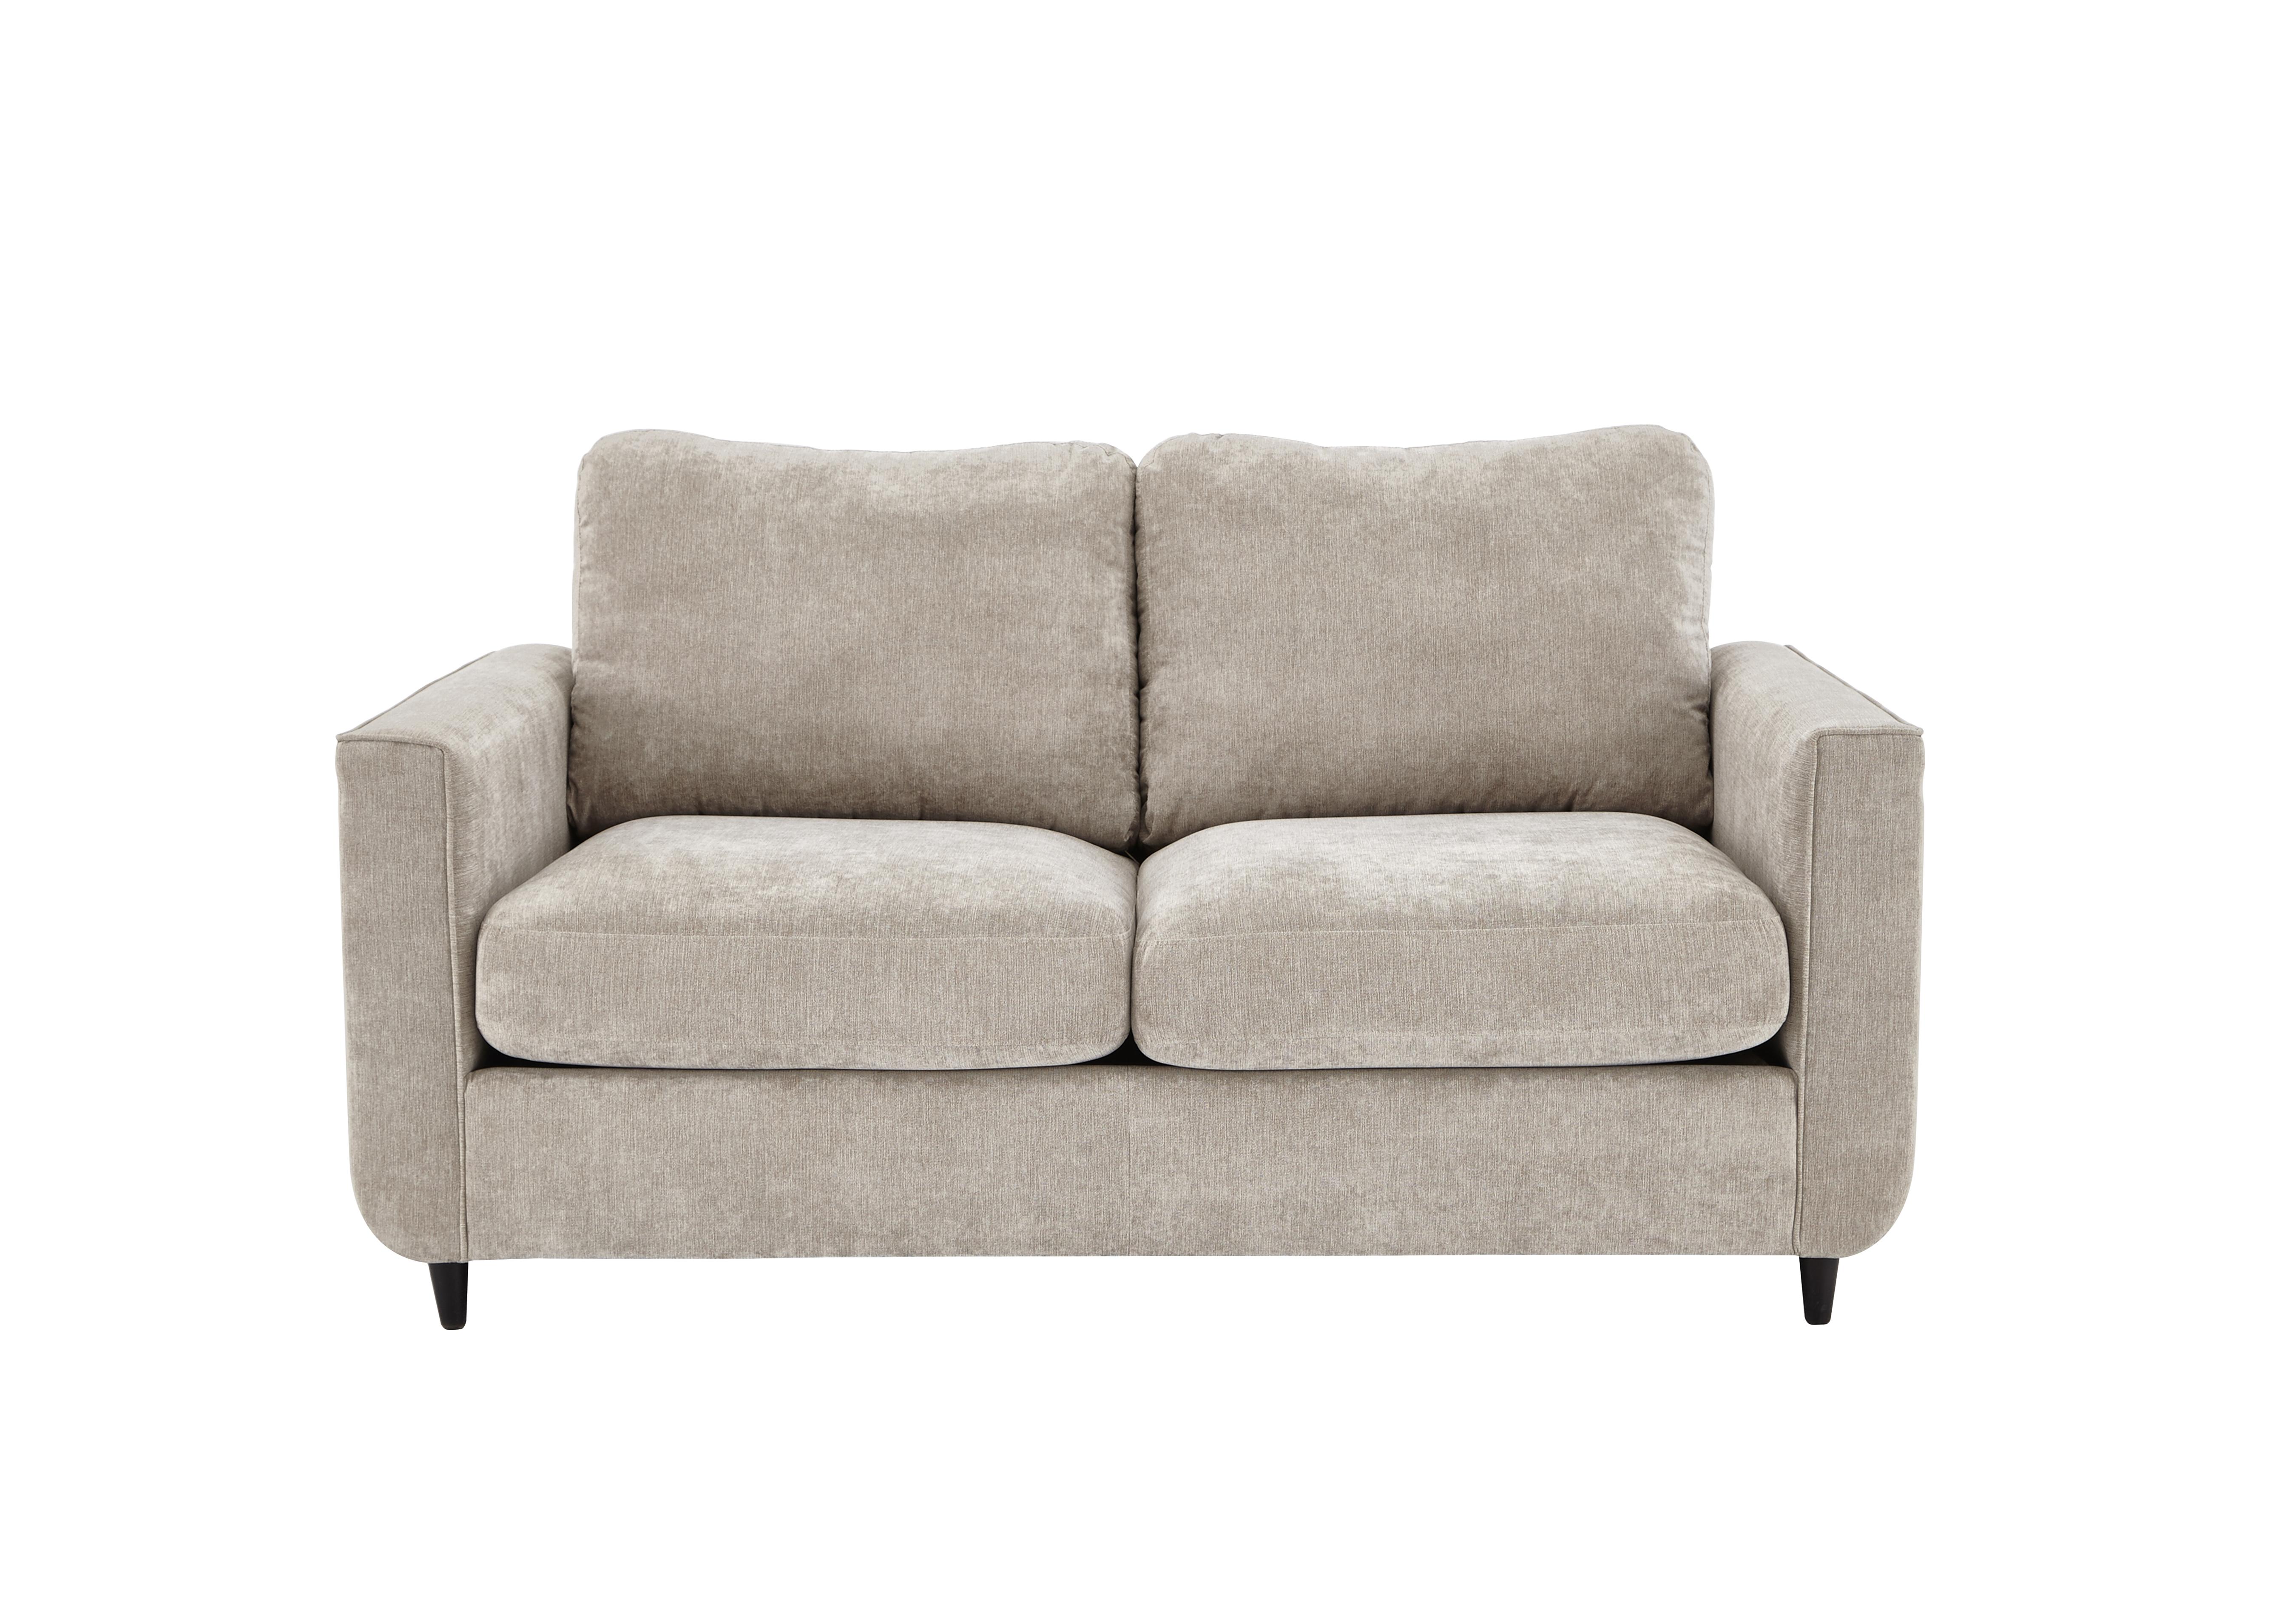 Esprit 2 Seater Fabric Sofa in Silver Ebony Feet on Furniture Village